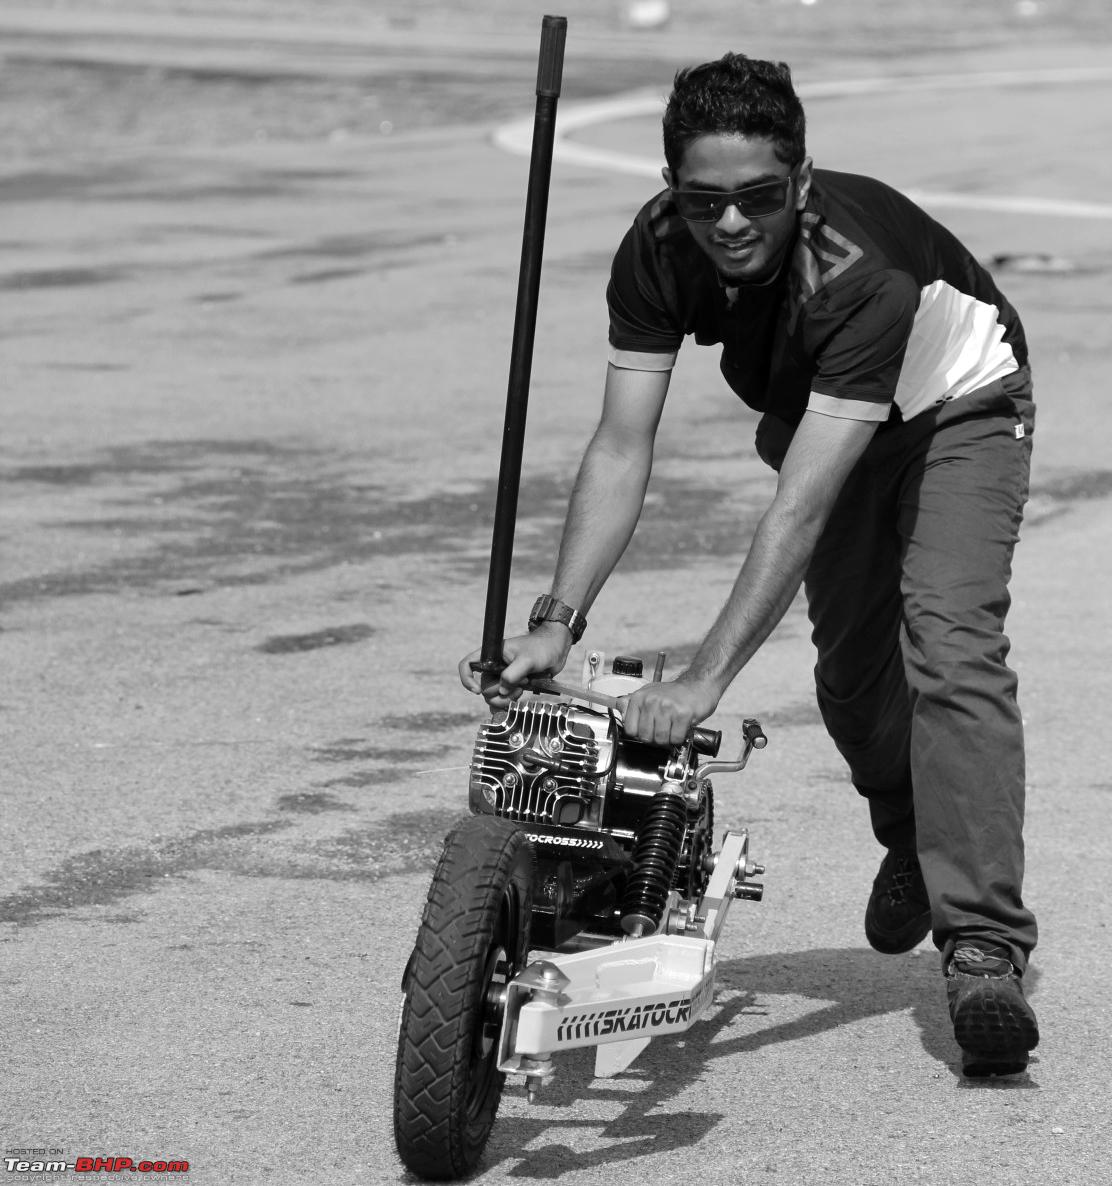 Skatokross from Karnataka - A skateboard with an engine - Team-BHP